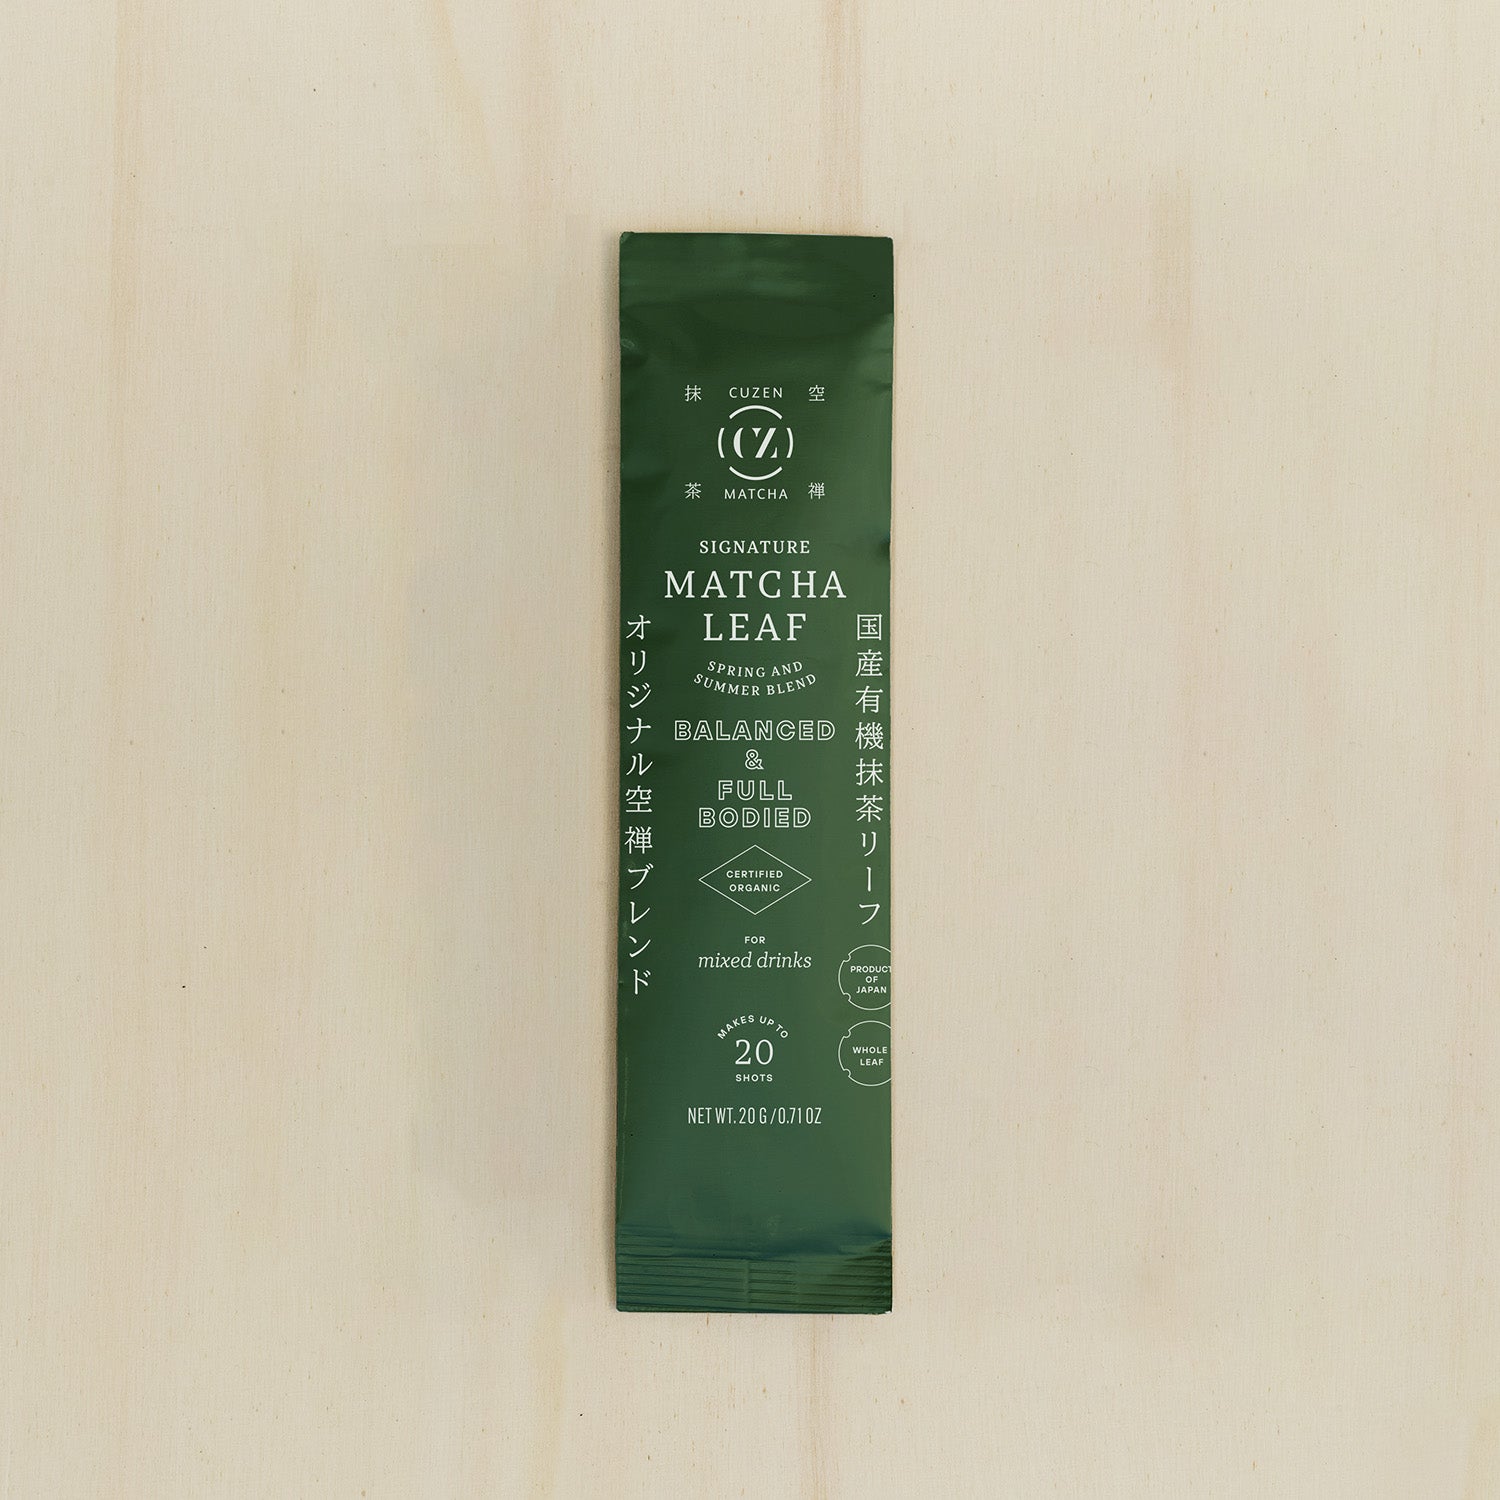 A green-colored, 20-gram packet of Cuzen’s Signature Matcha Leaf.